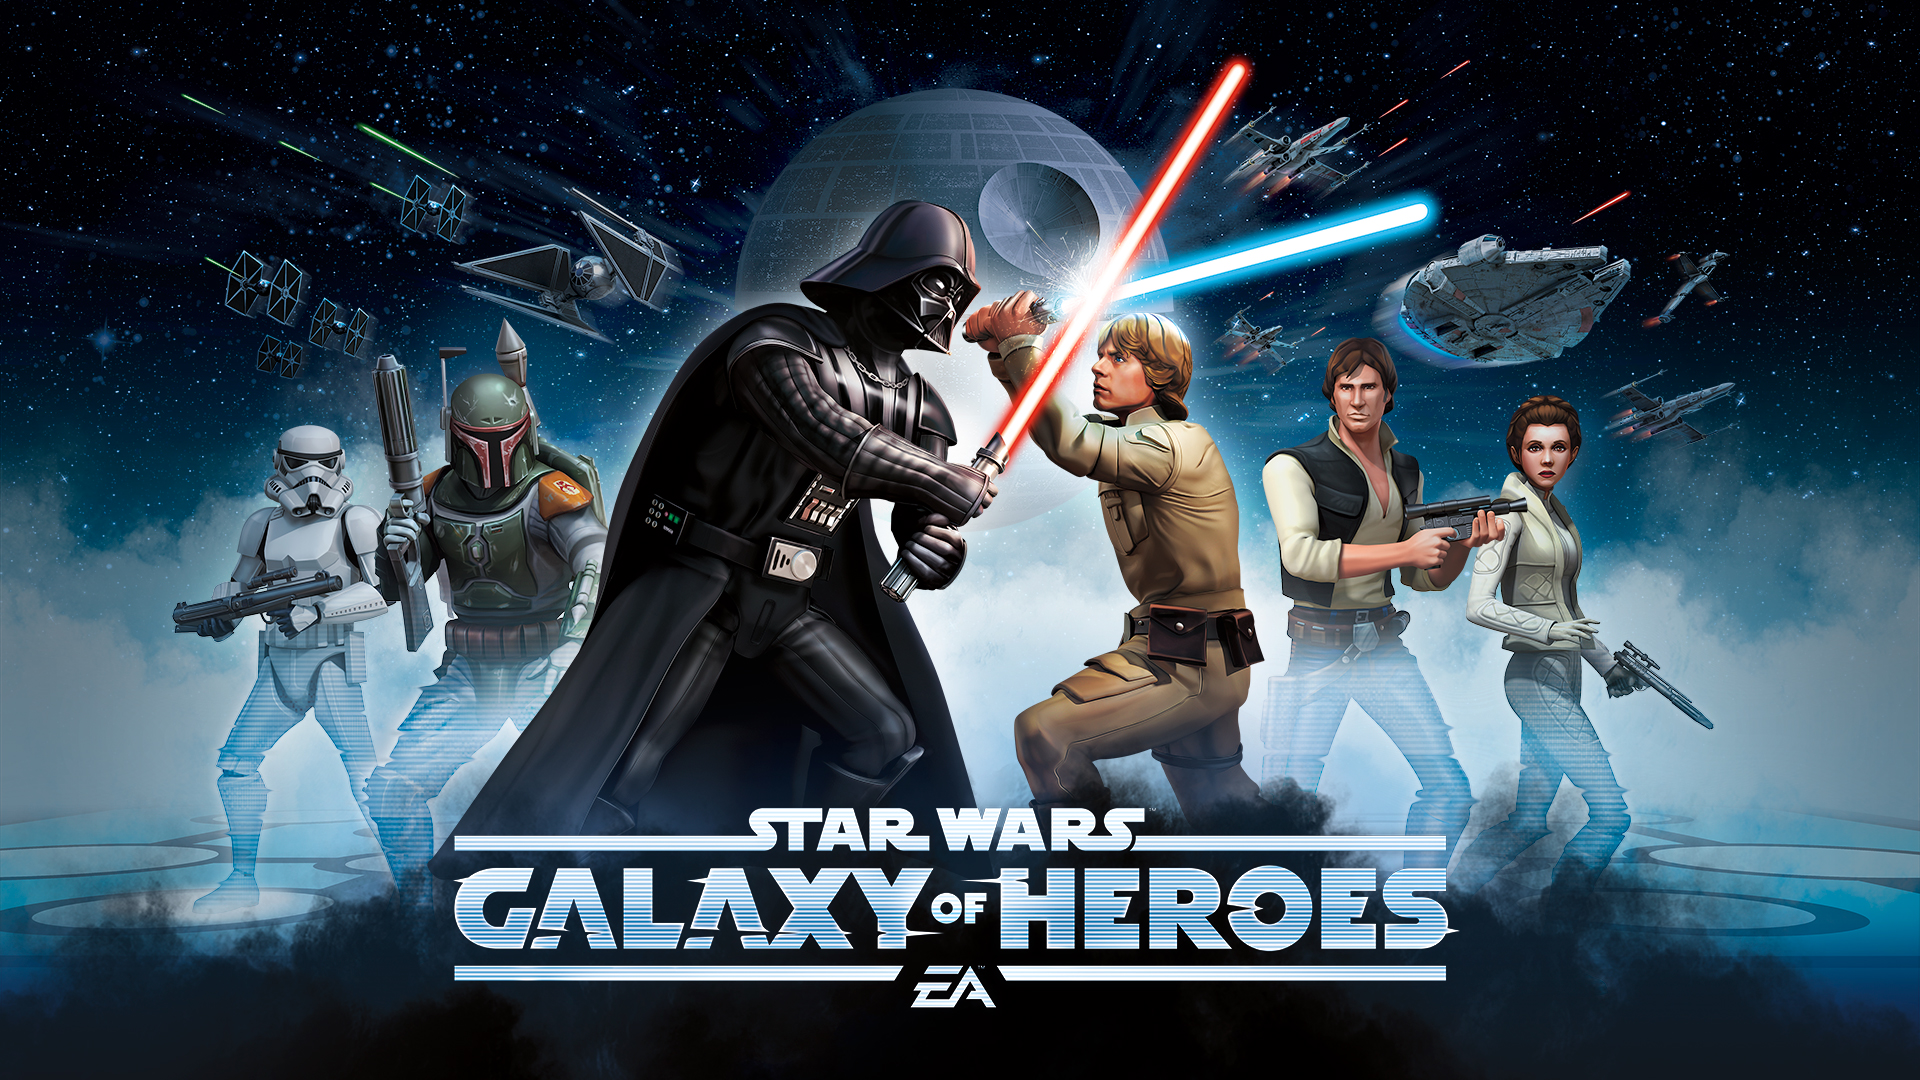 『Star Wars Galaxy of Heroes:銀河の英雄』が配信開始！ 伝説のヒーローたちを集めて夢のチームを結成せよ